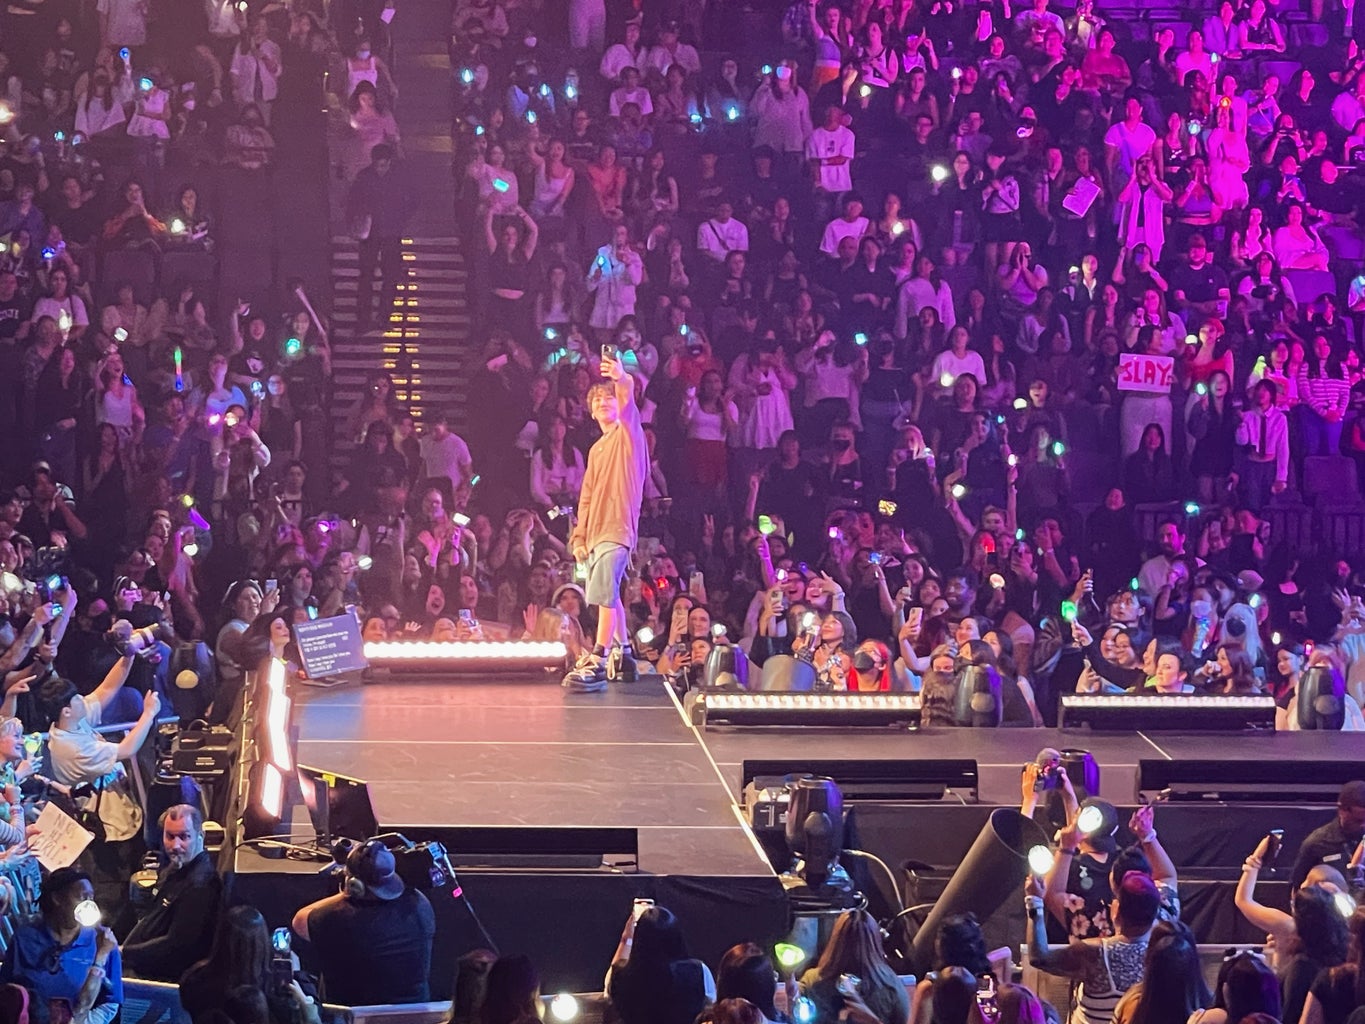 k-pop singer on stage taking selfie with fans